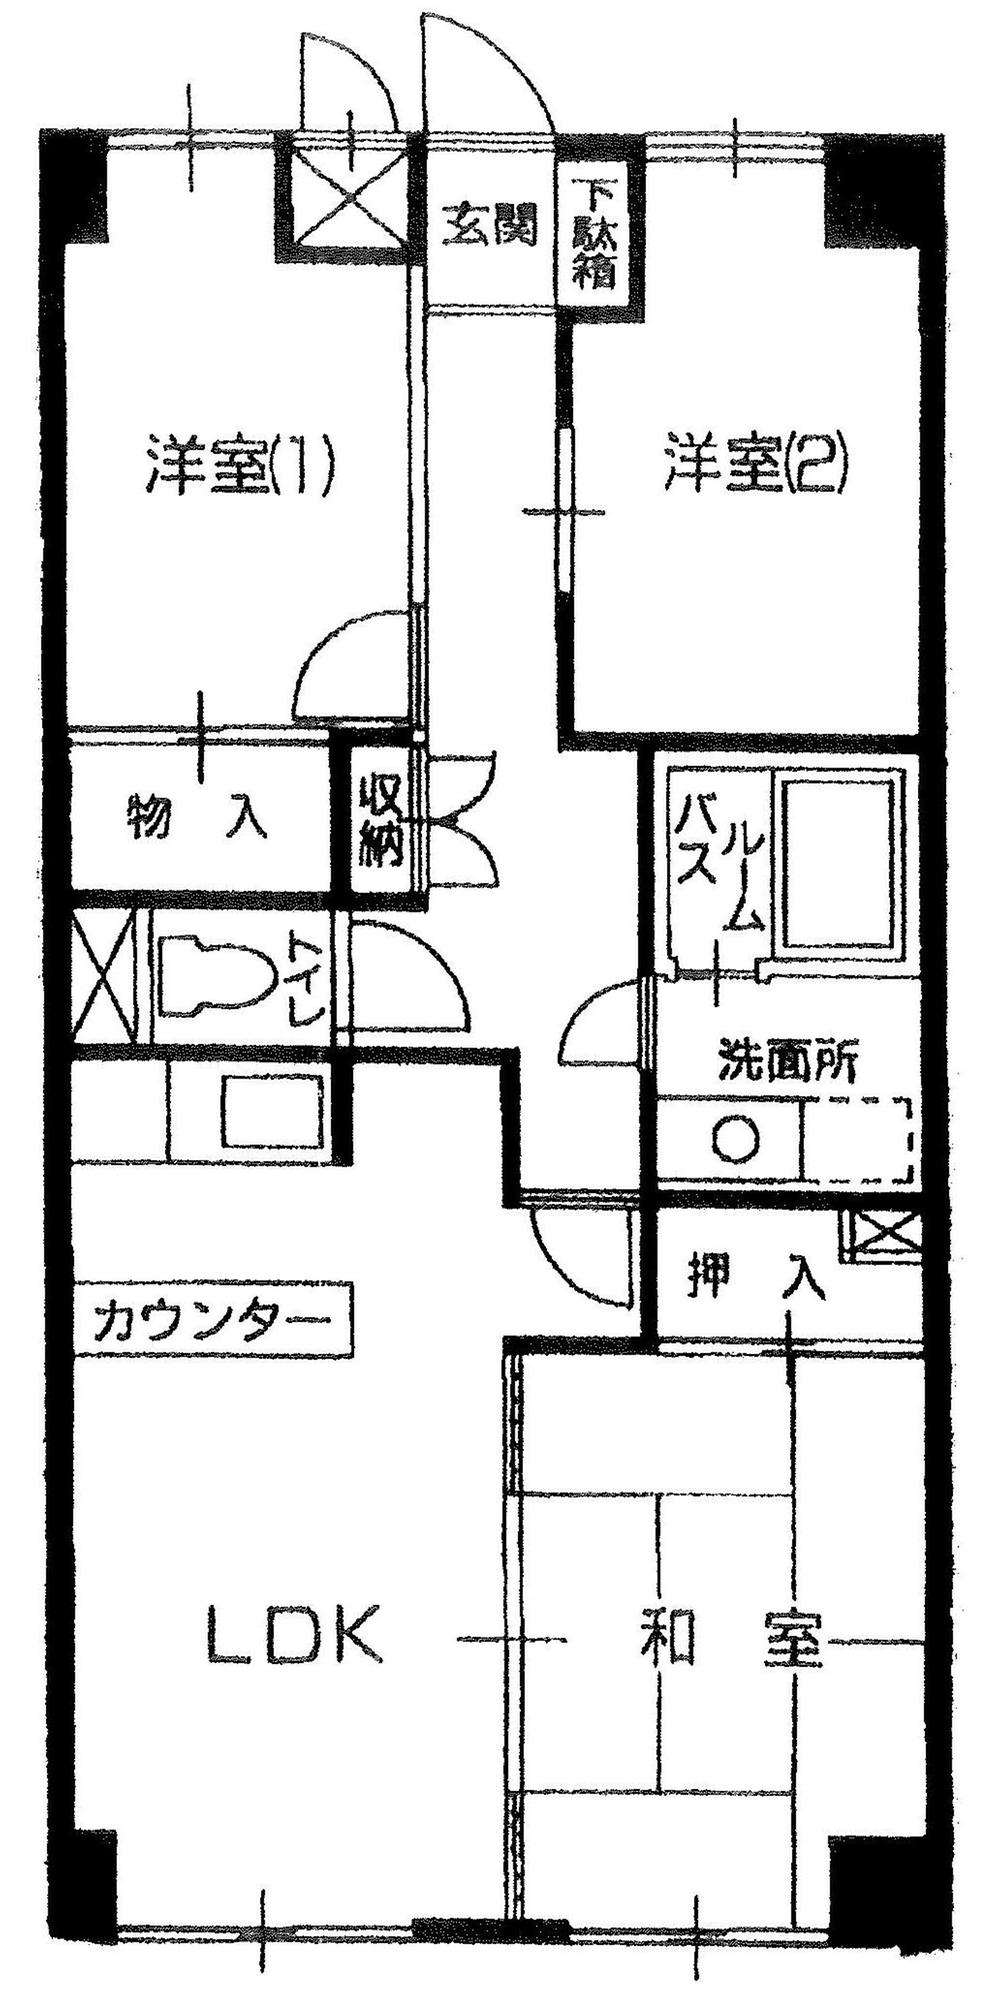 Floor plan. 3LDK, Price 4.9 million yen, Occupied area 55.73 sq m